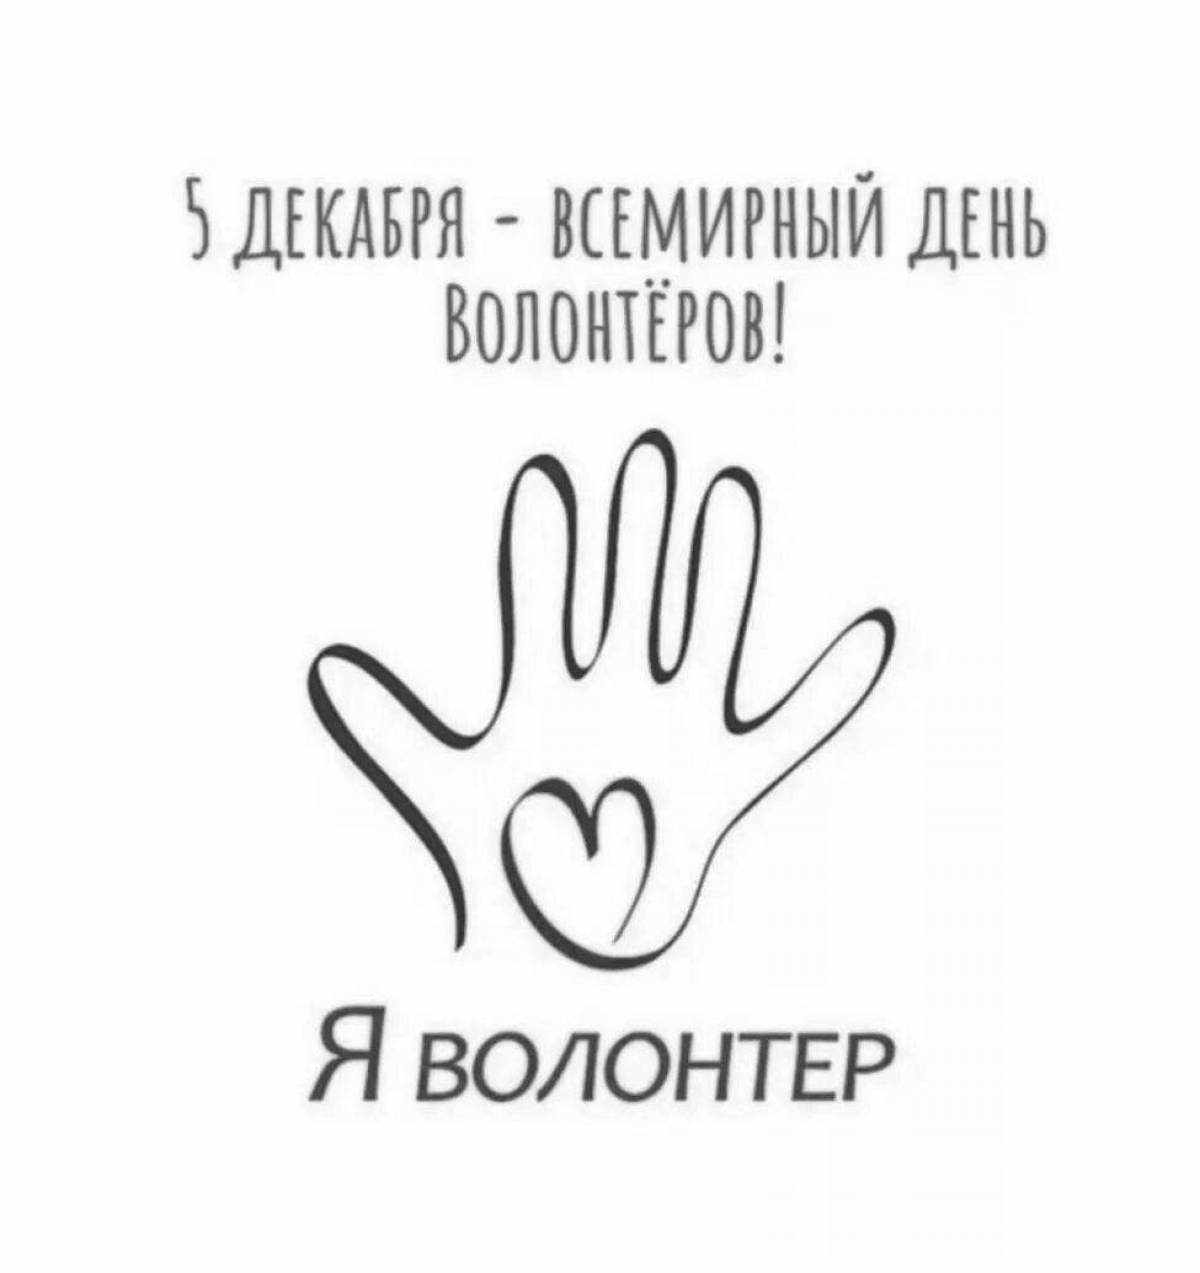 A shining symbol of volunteerism in Russia